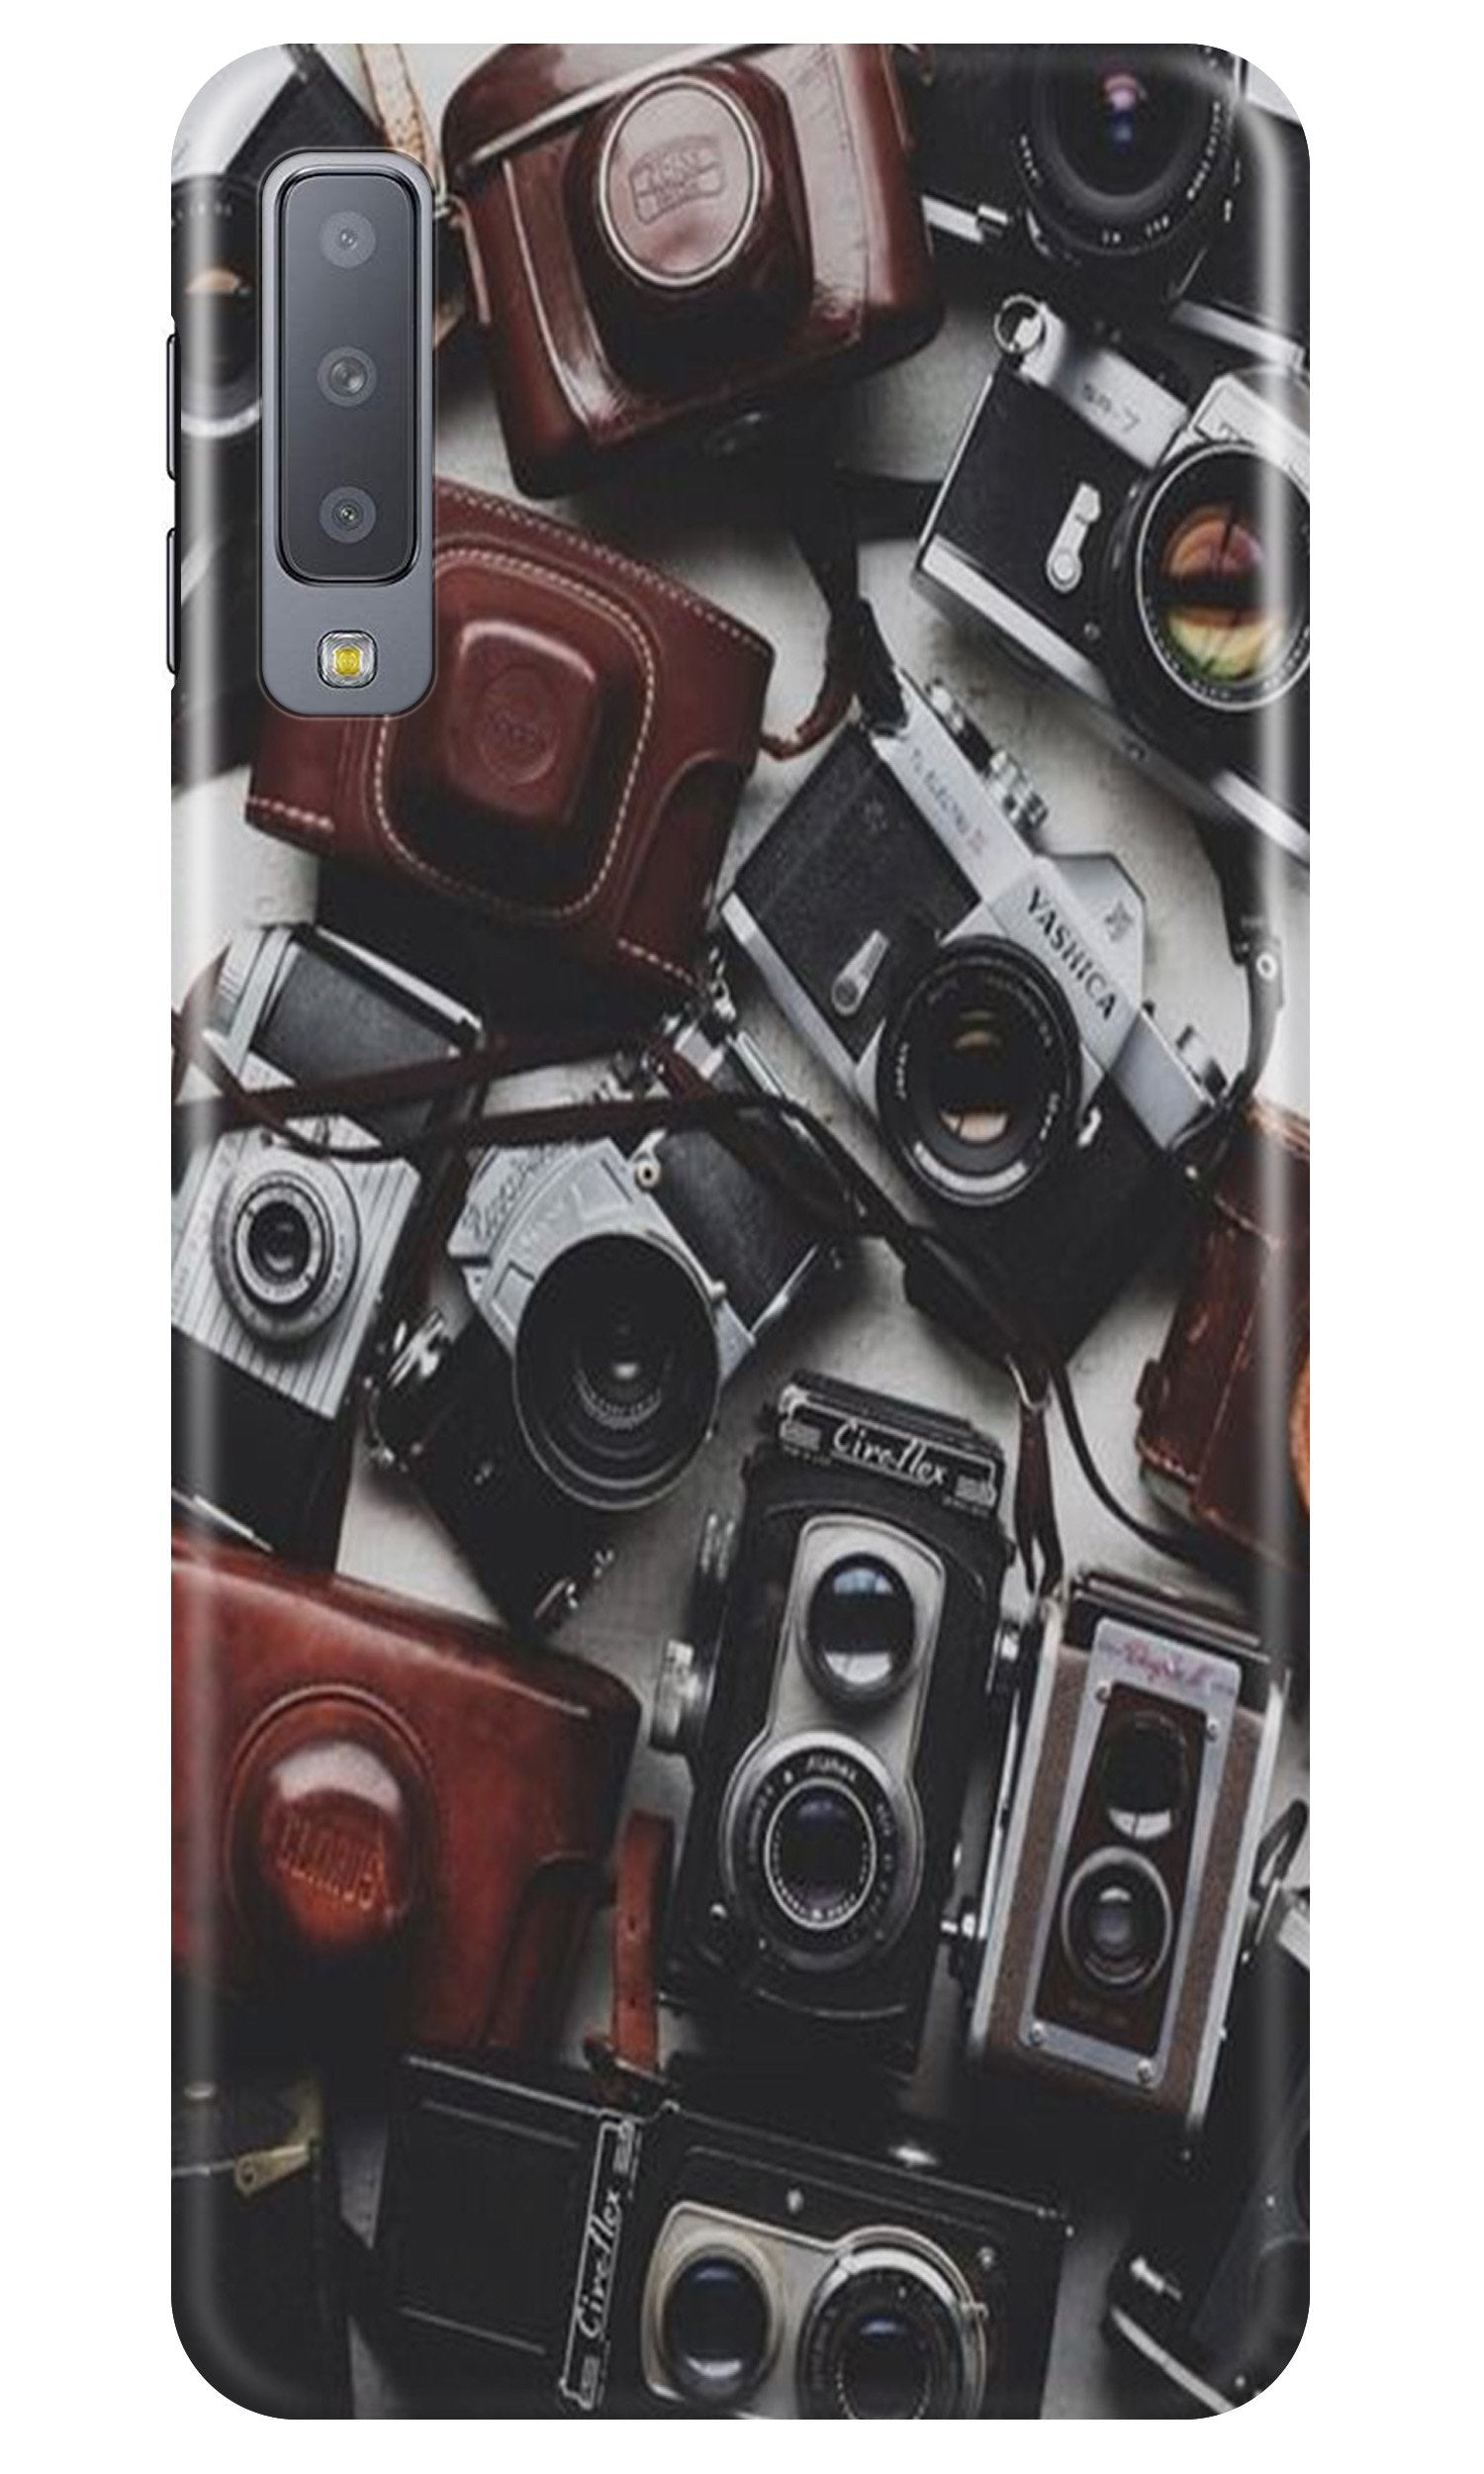 Cameras Case for Samung Galaxy A70s